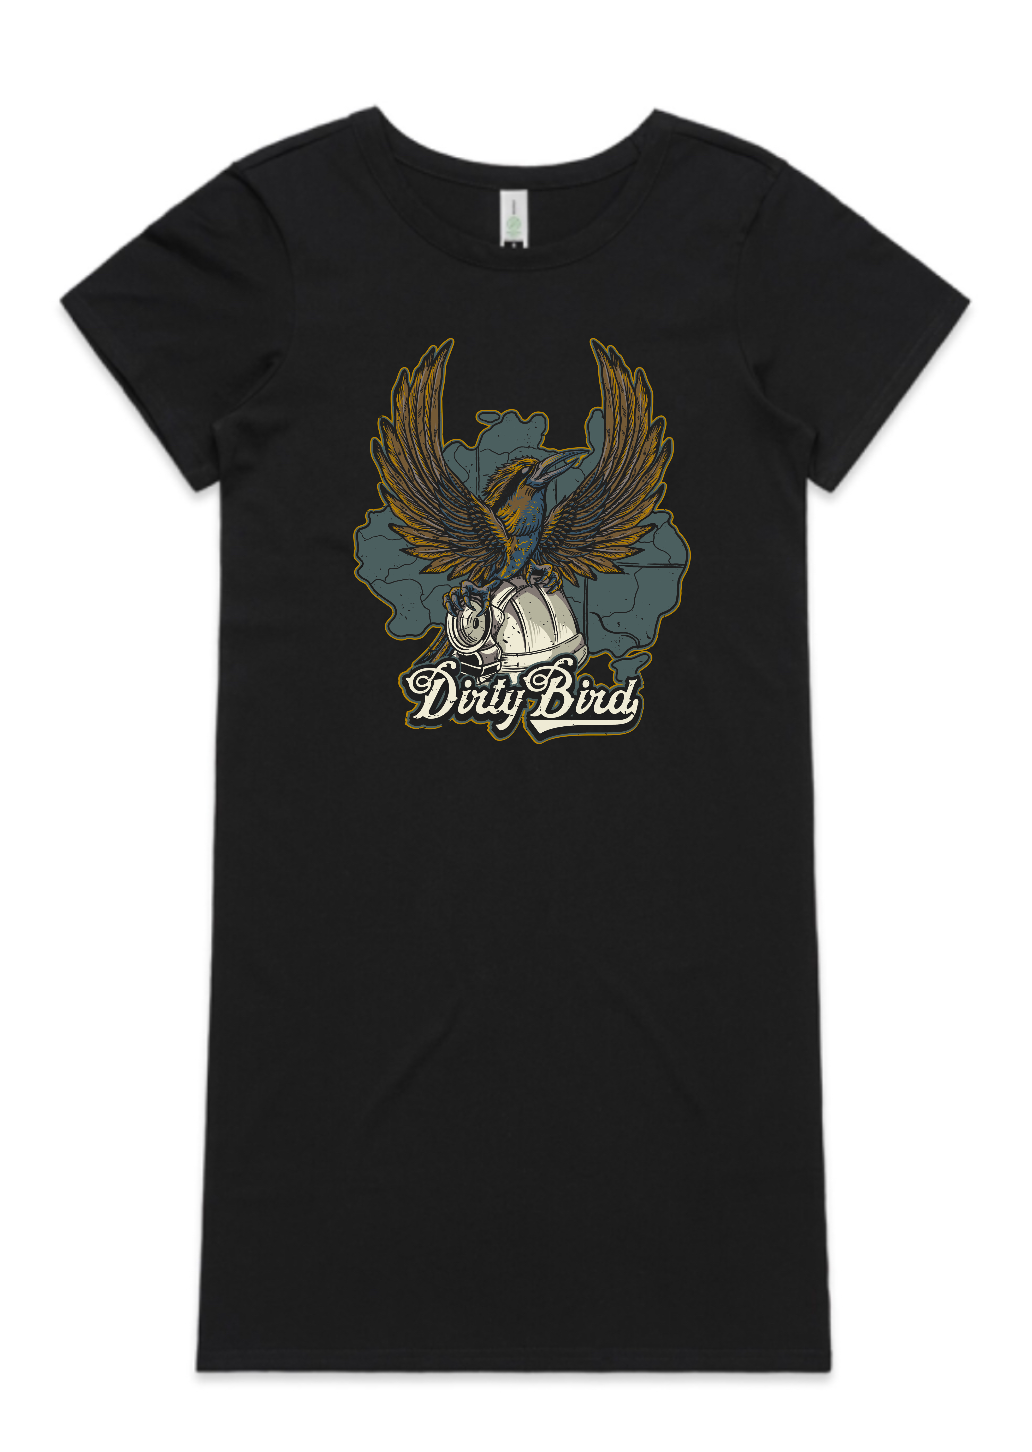 Dirty Bird - Kookaburra - dress